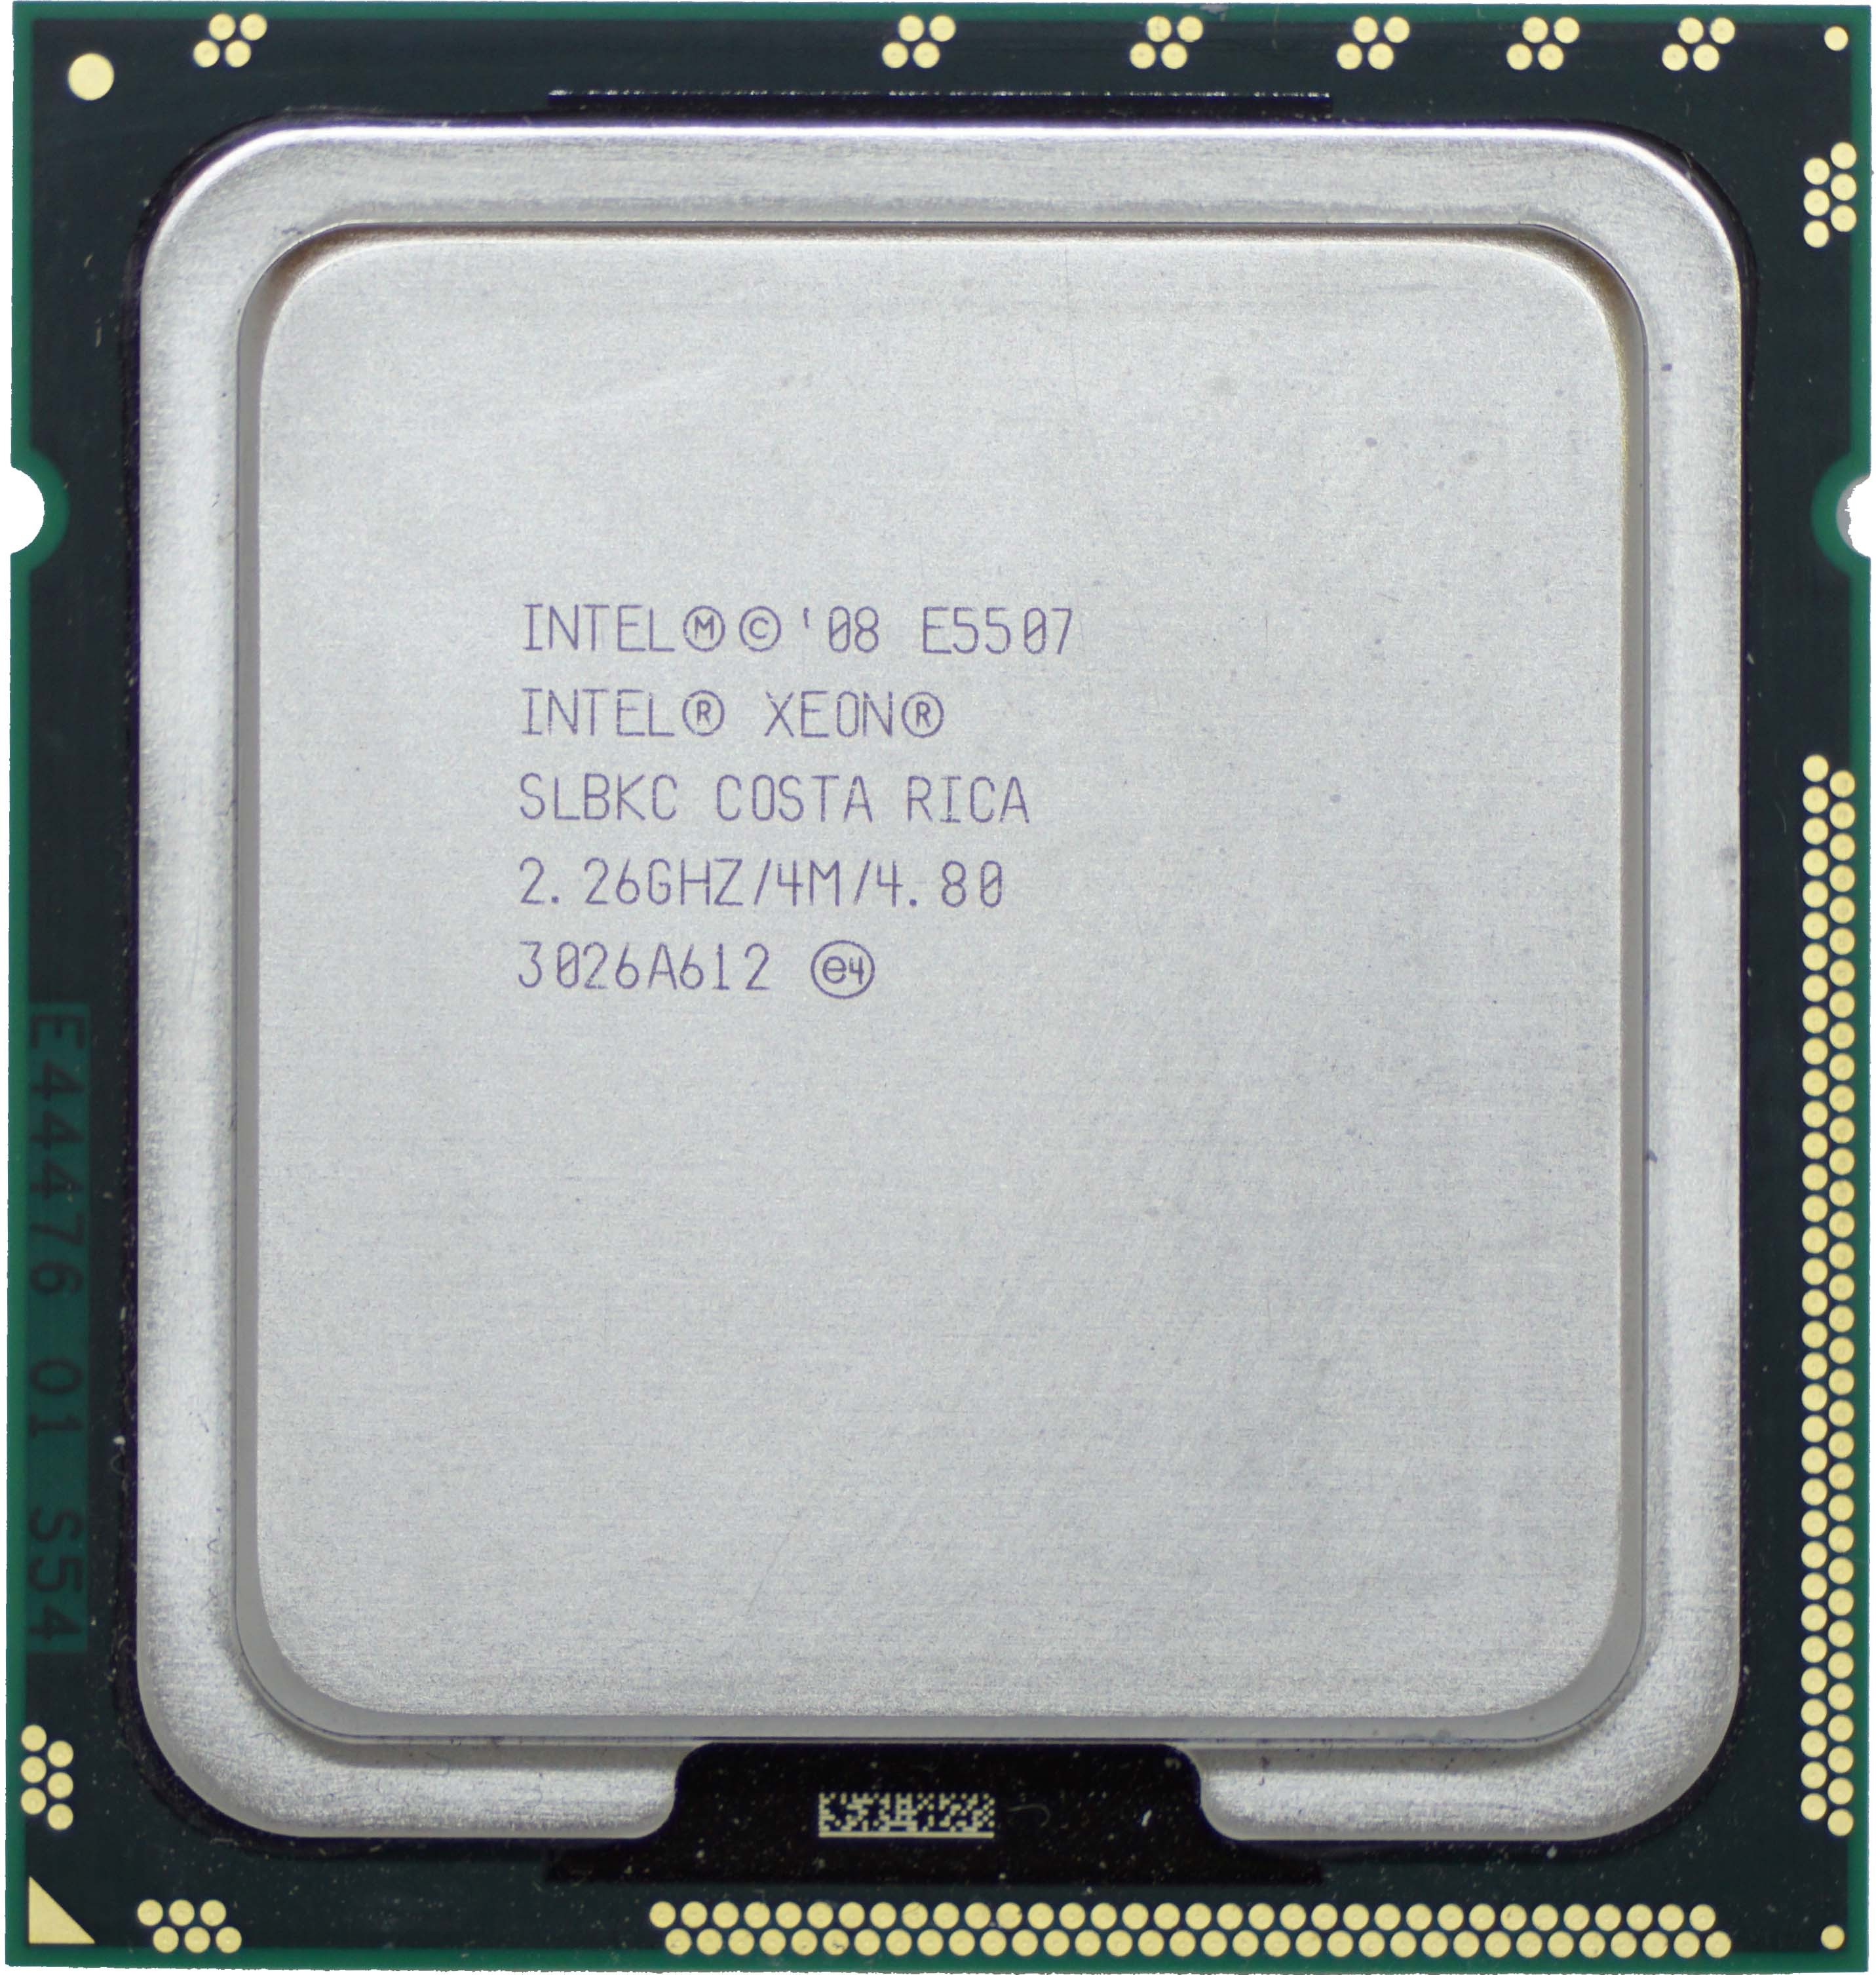 Intel Xeon E5507 (SLBKC) 2.26Ghz Quad (4) Core LGA1366 80W CPU